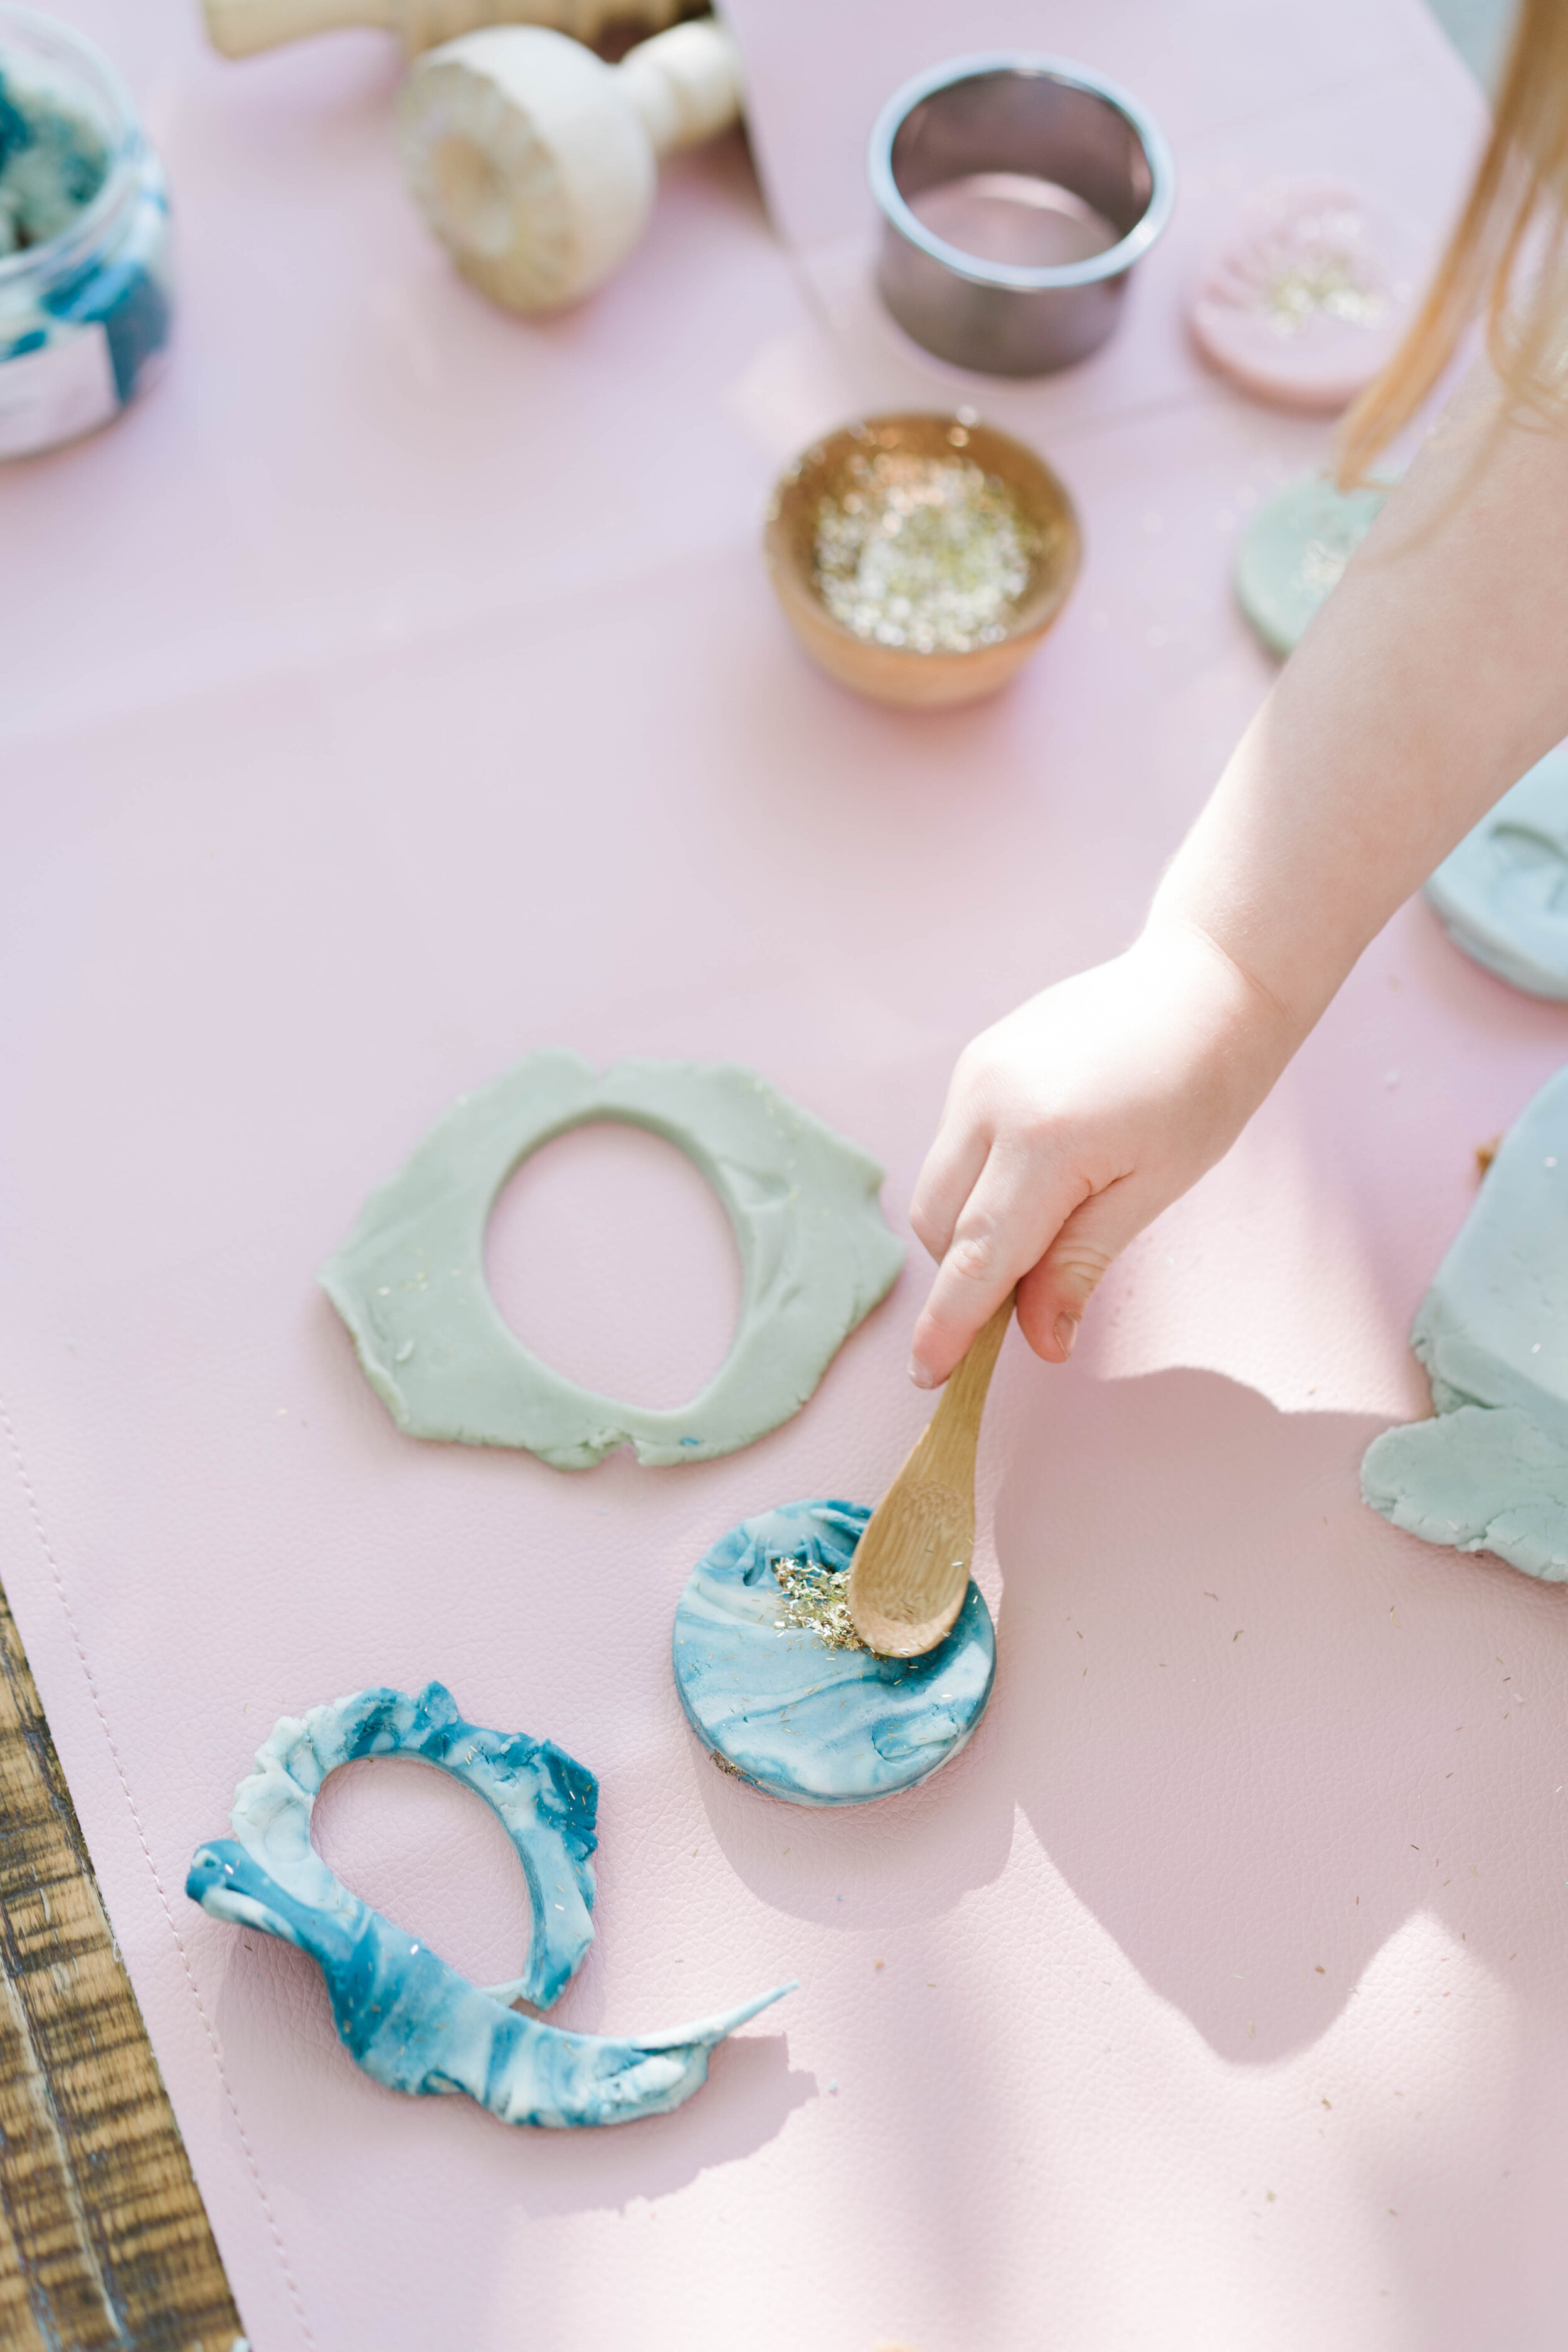 Tippytoe Crafts: Play-Dough Arches